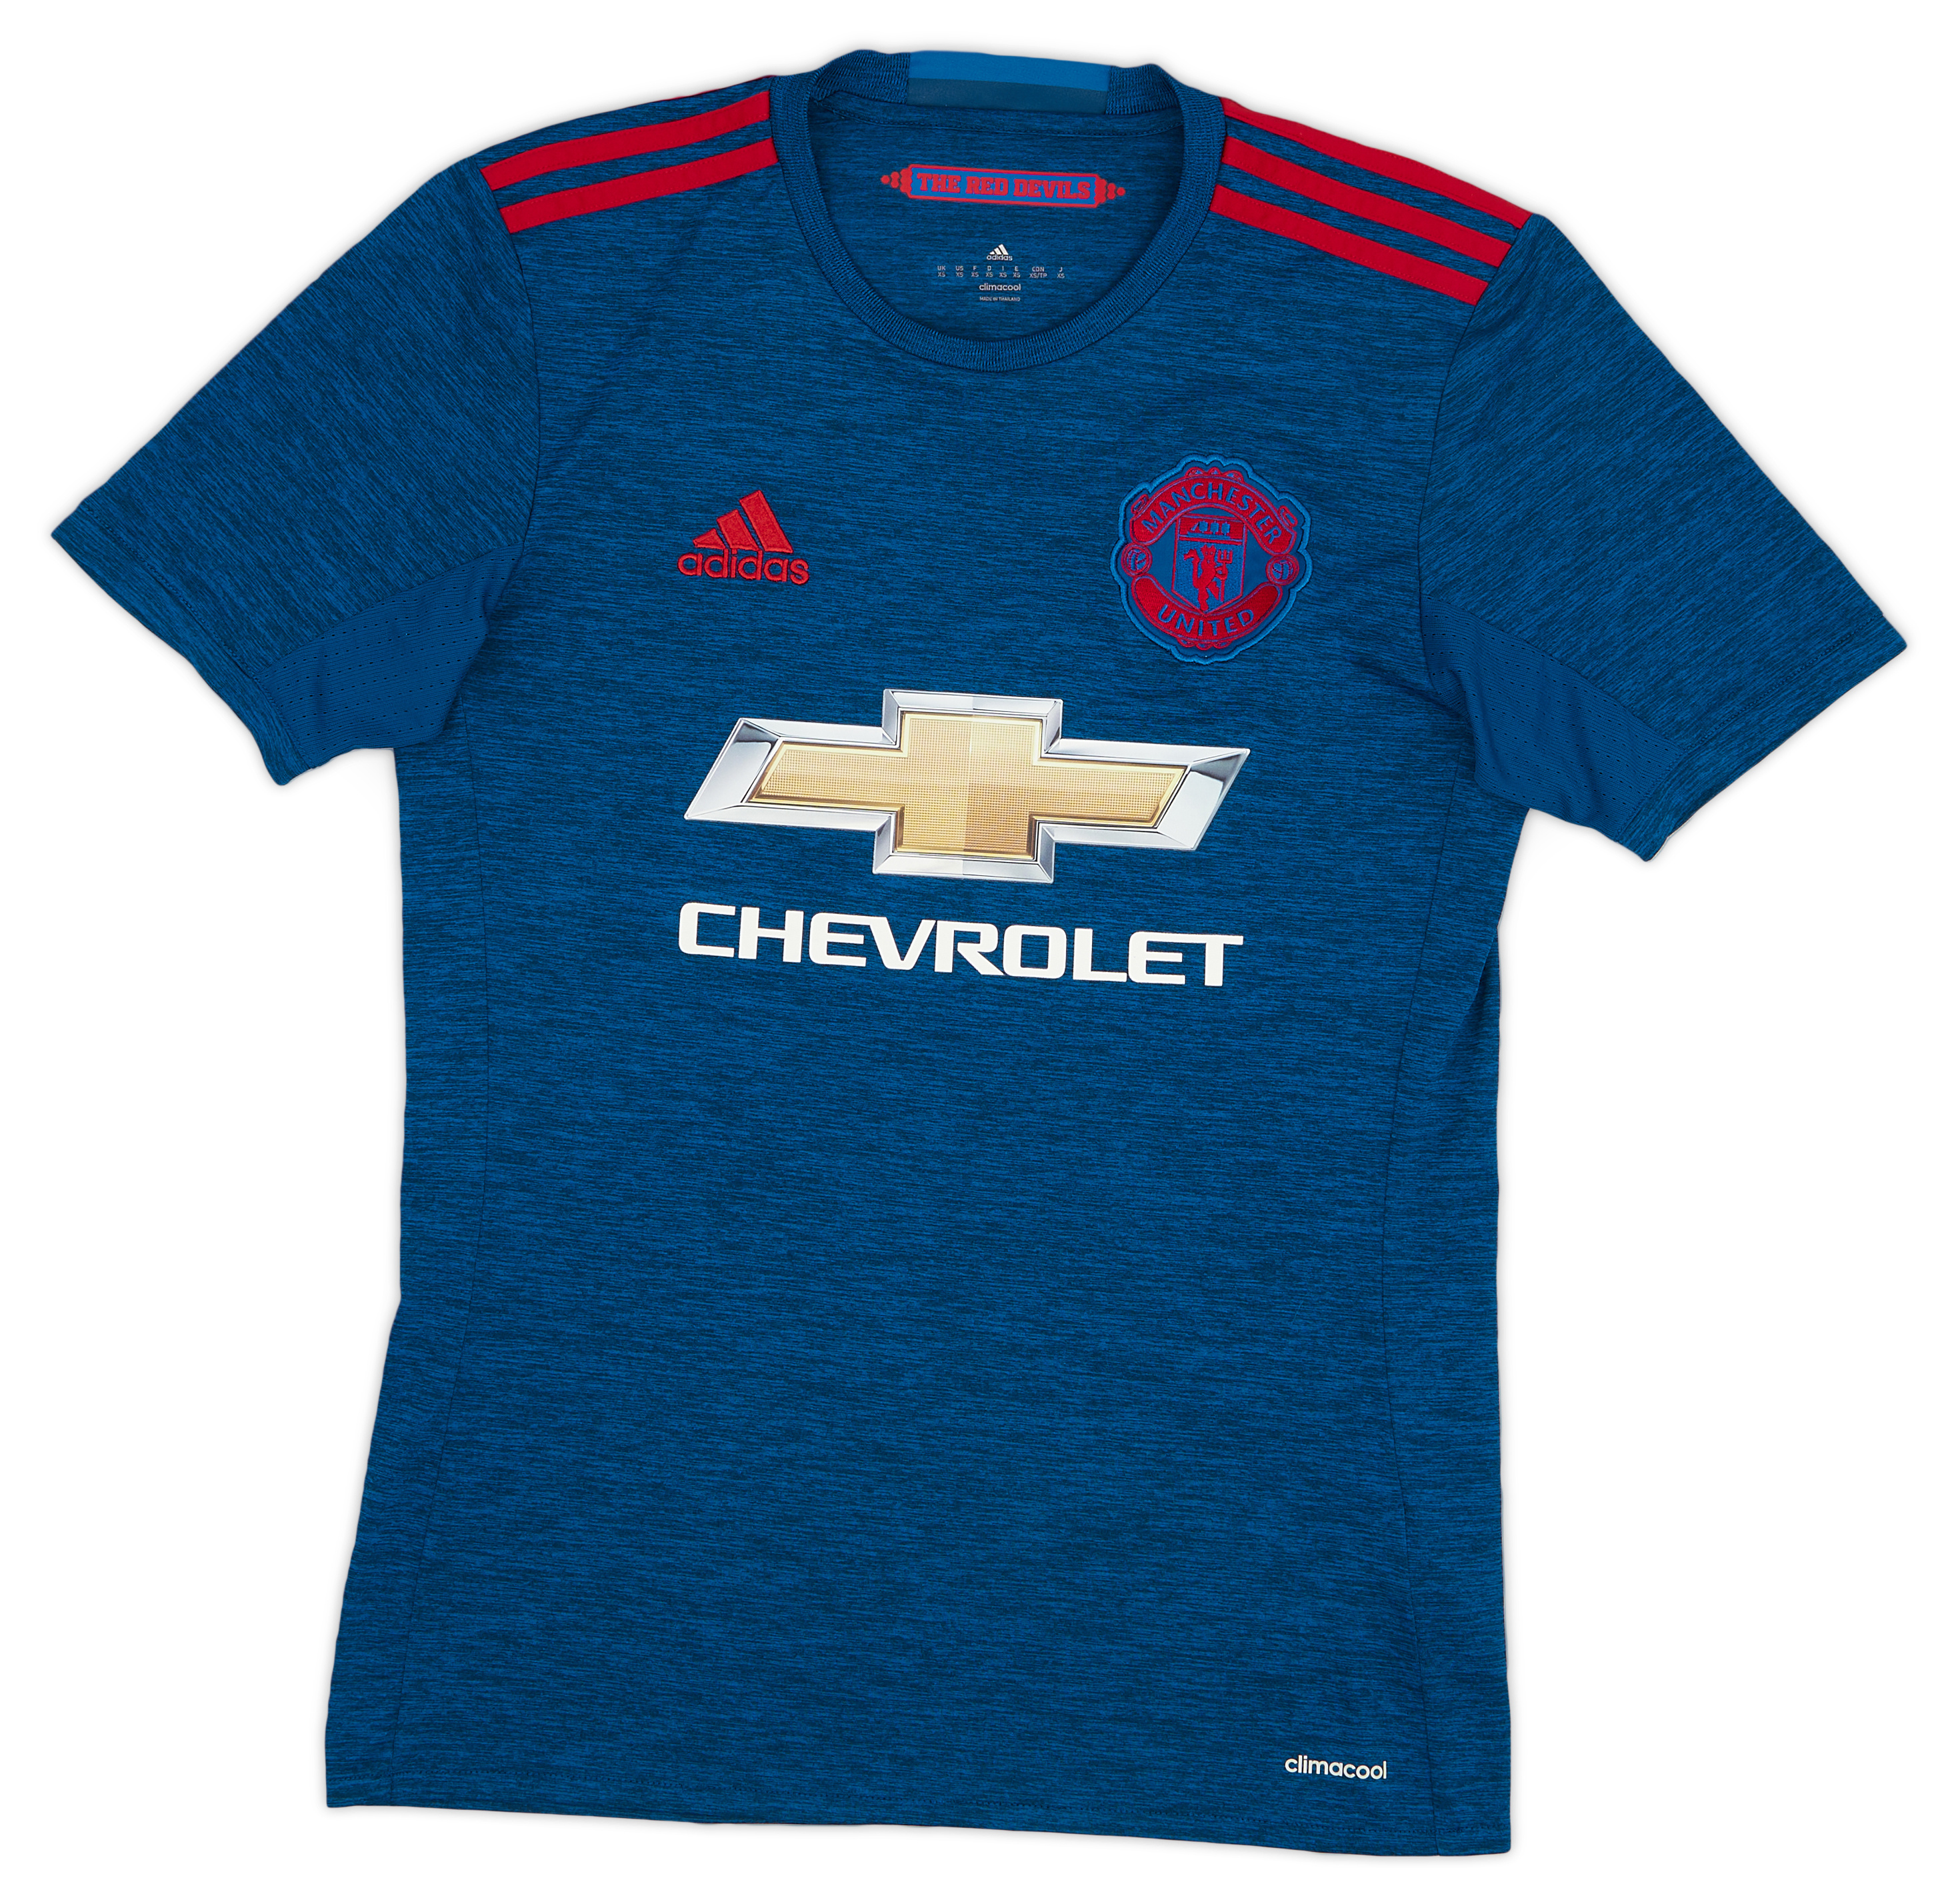 2016-17 Manchester United Away Shirt - 9/10 - ()